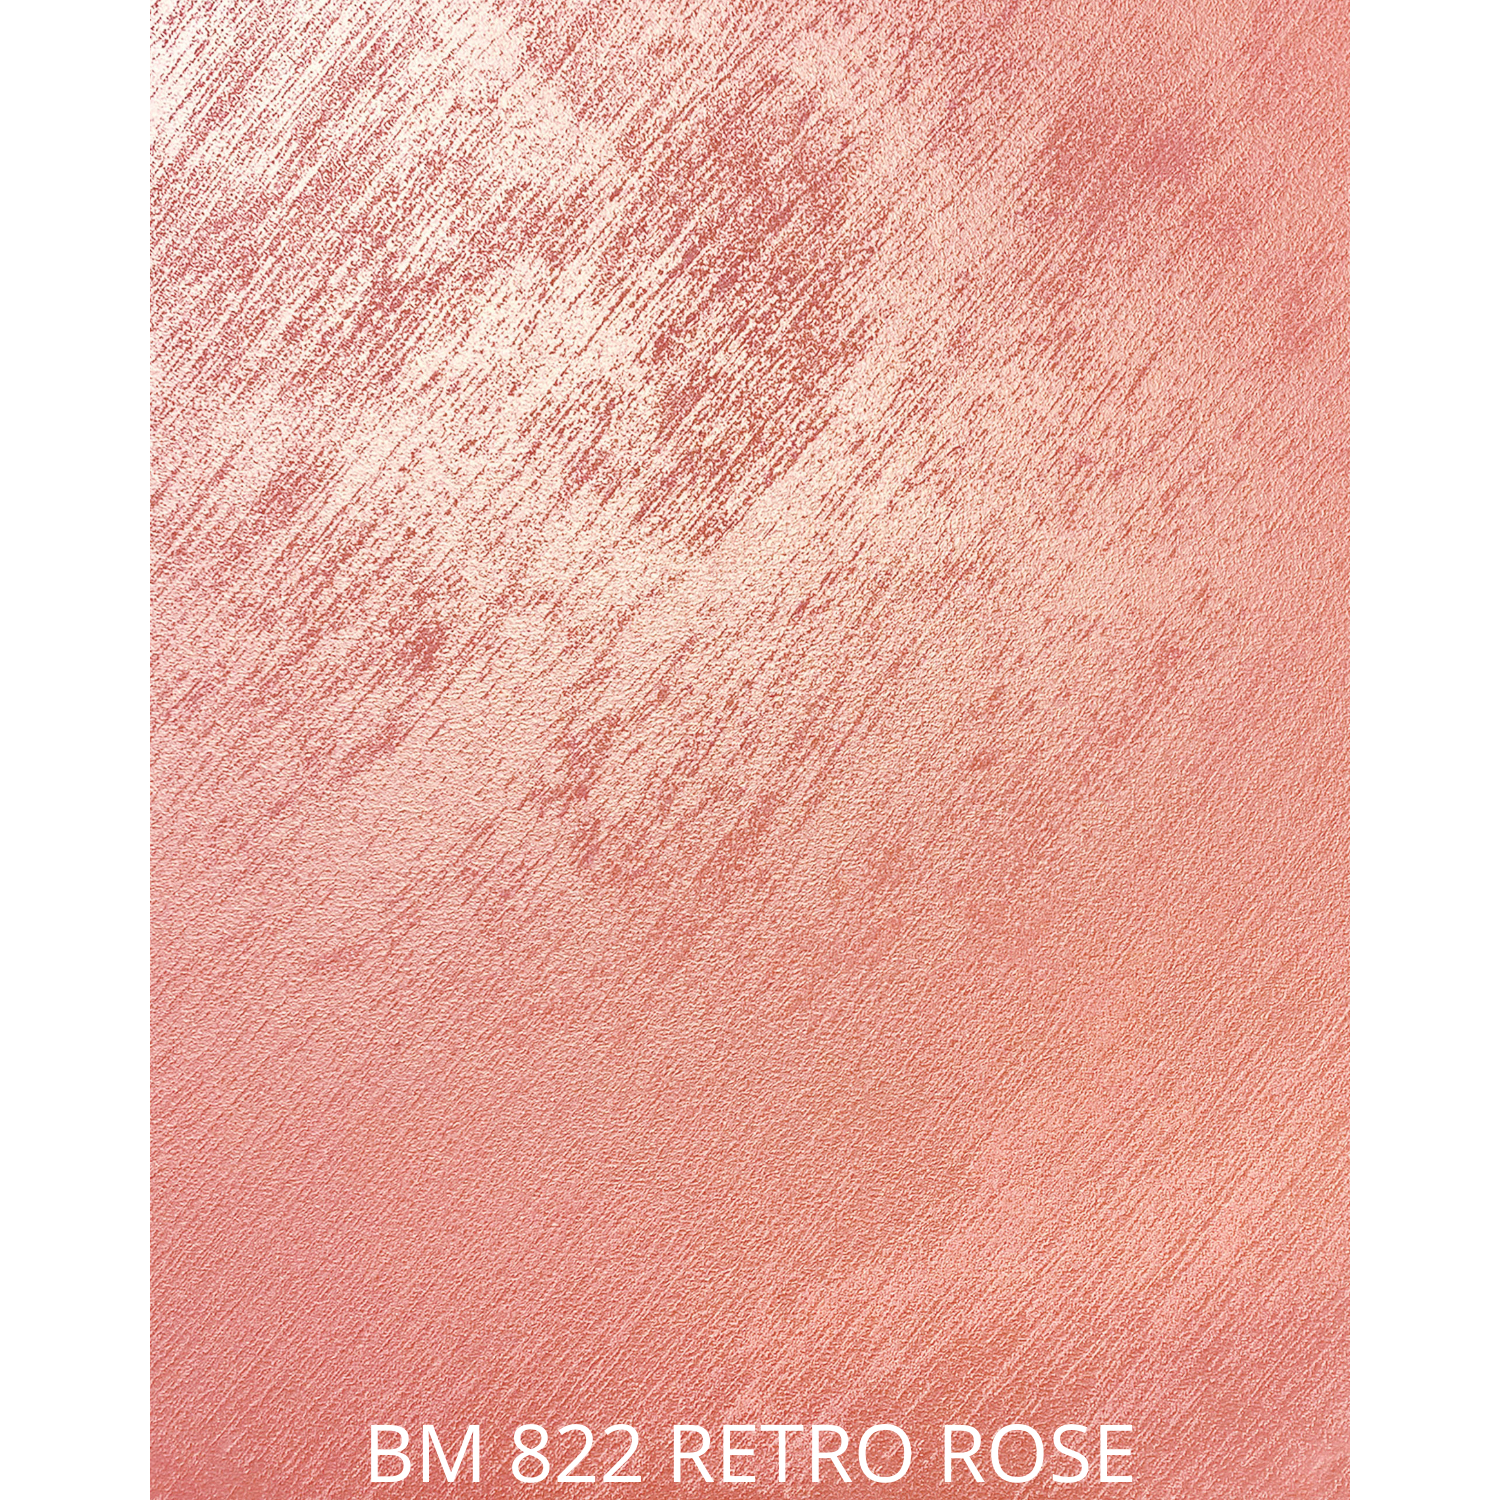 BM 822 RETRO ROSE